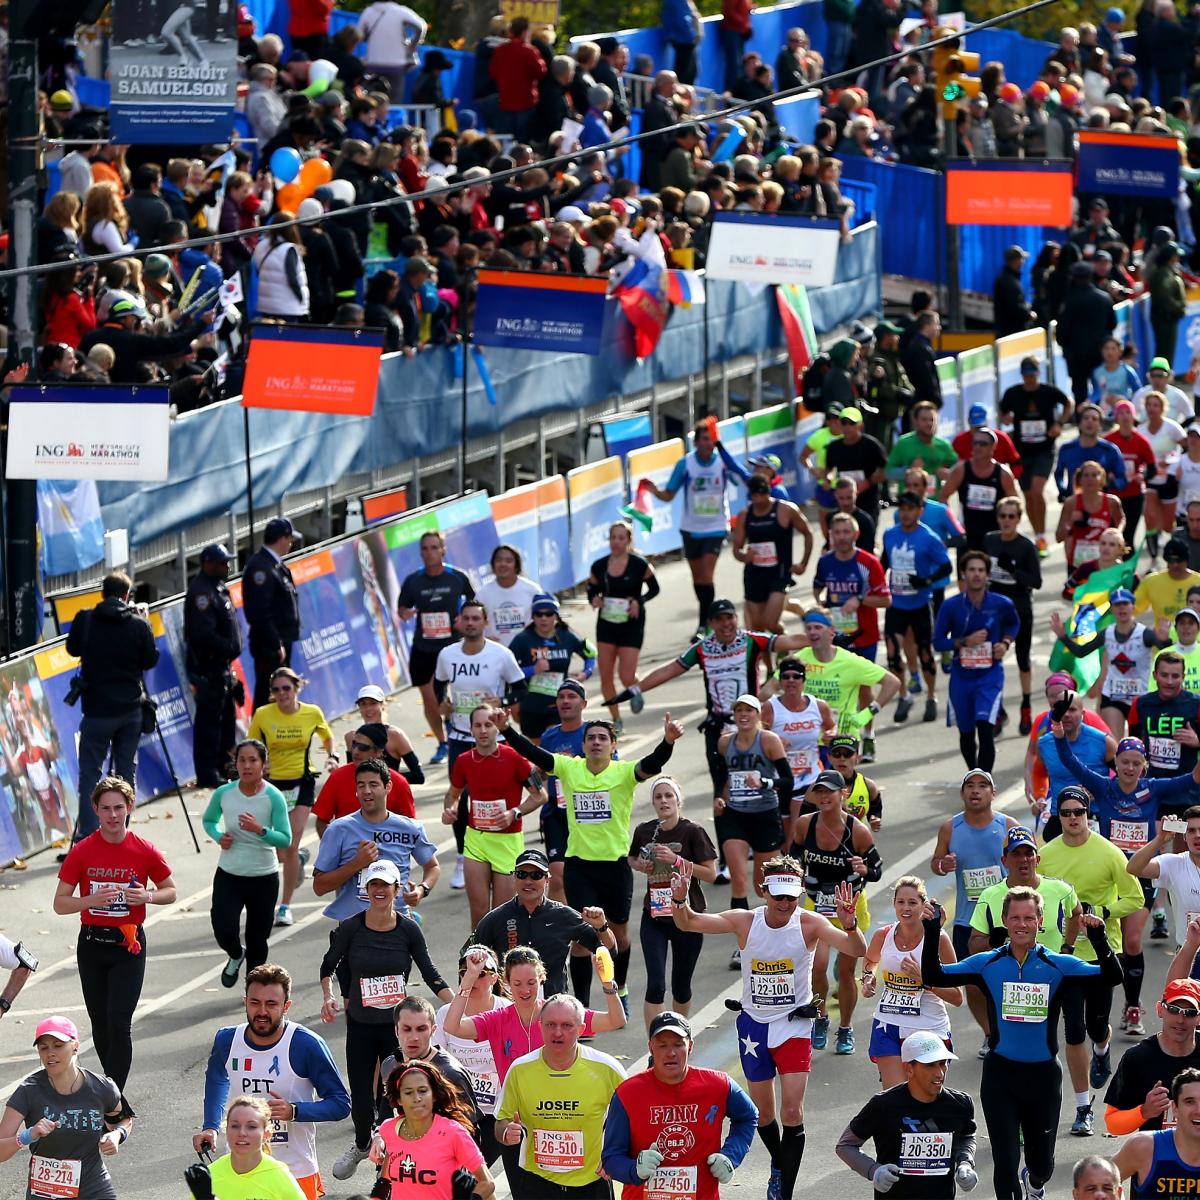 Cebu Marathon 2014: Route, Start Time, Date and More | News, Scores ...